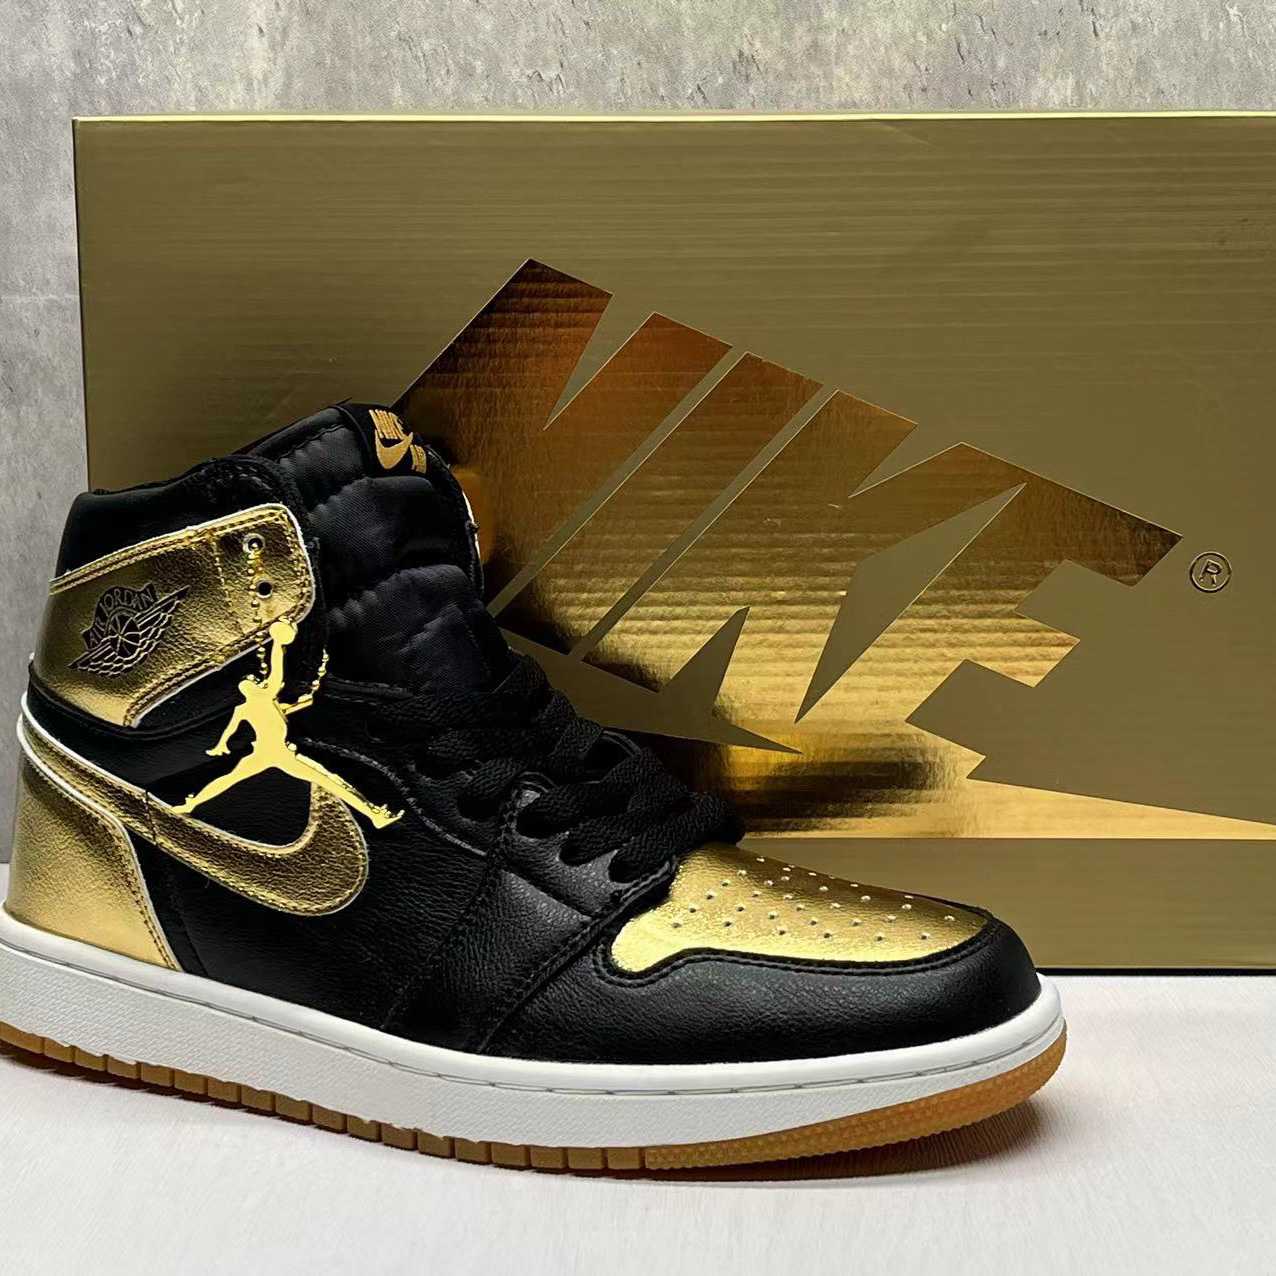 Jordan 1 High OG “Metallic Gold” Sneaker   DZ5485-071 - everydesigner